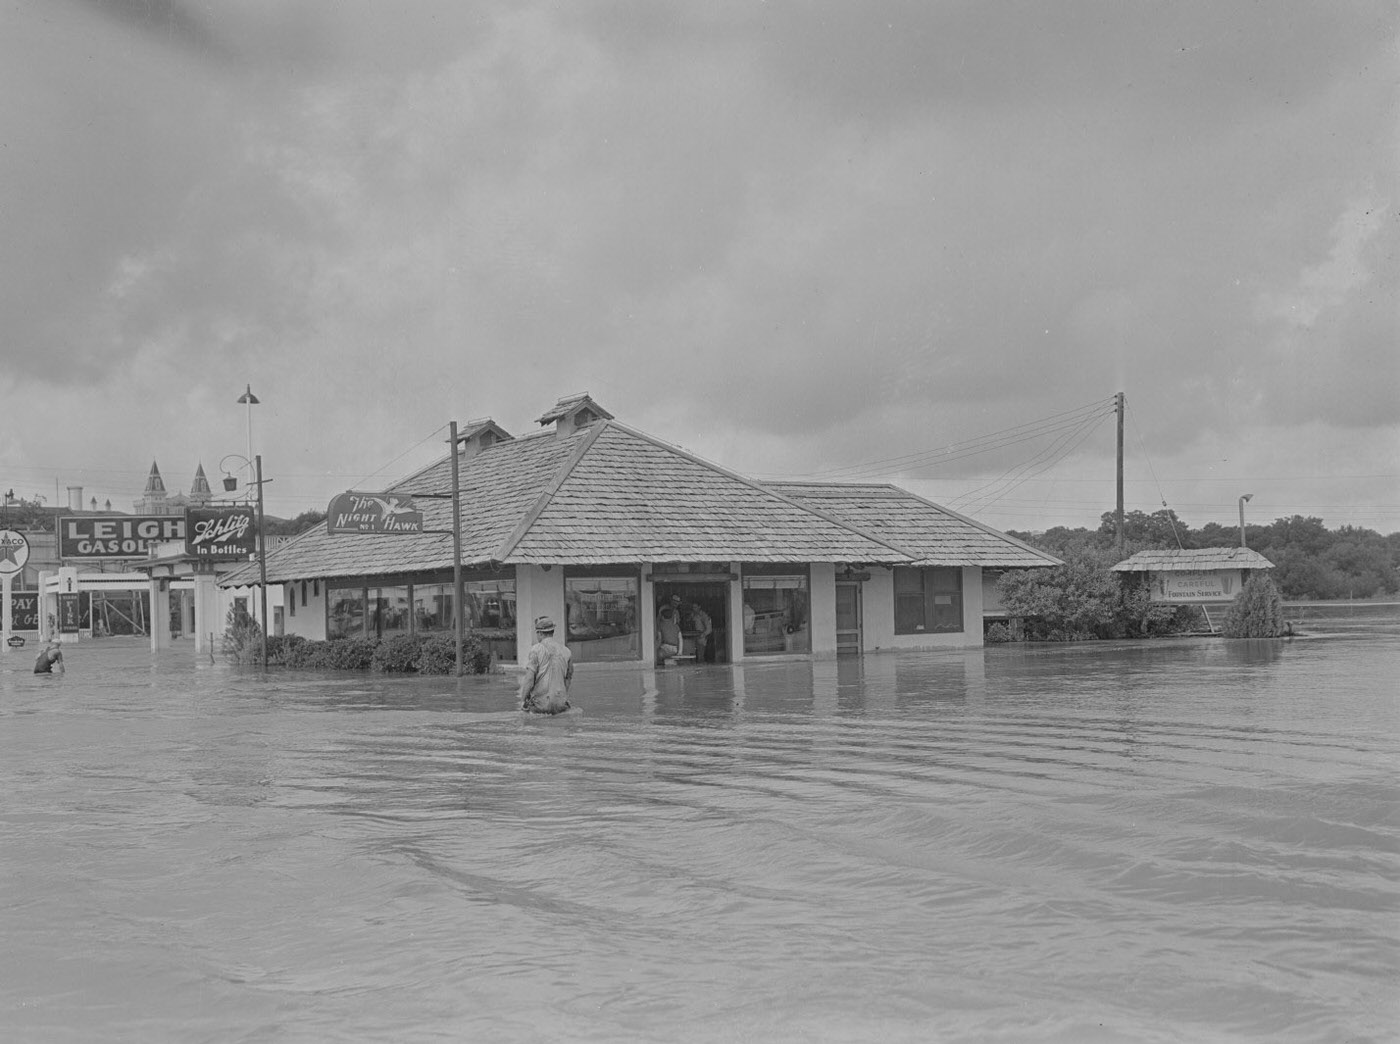 Night Hawk Restaurant During 1957 Flood, 1957.